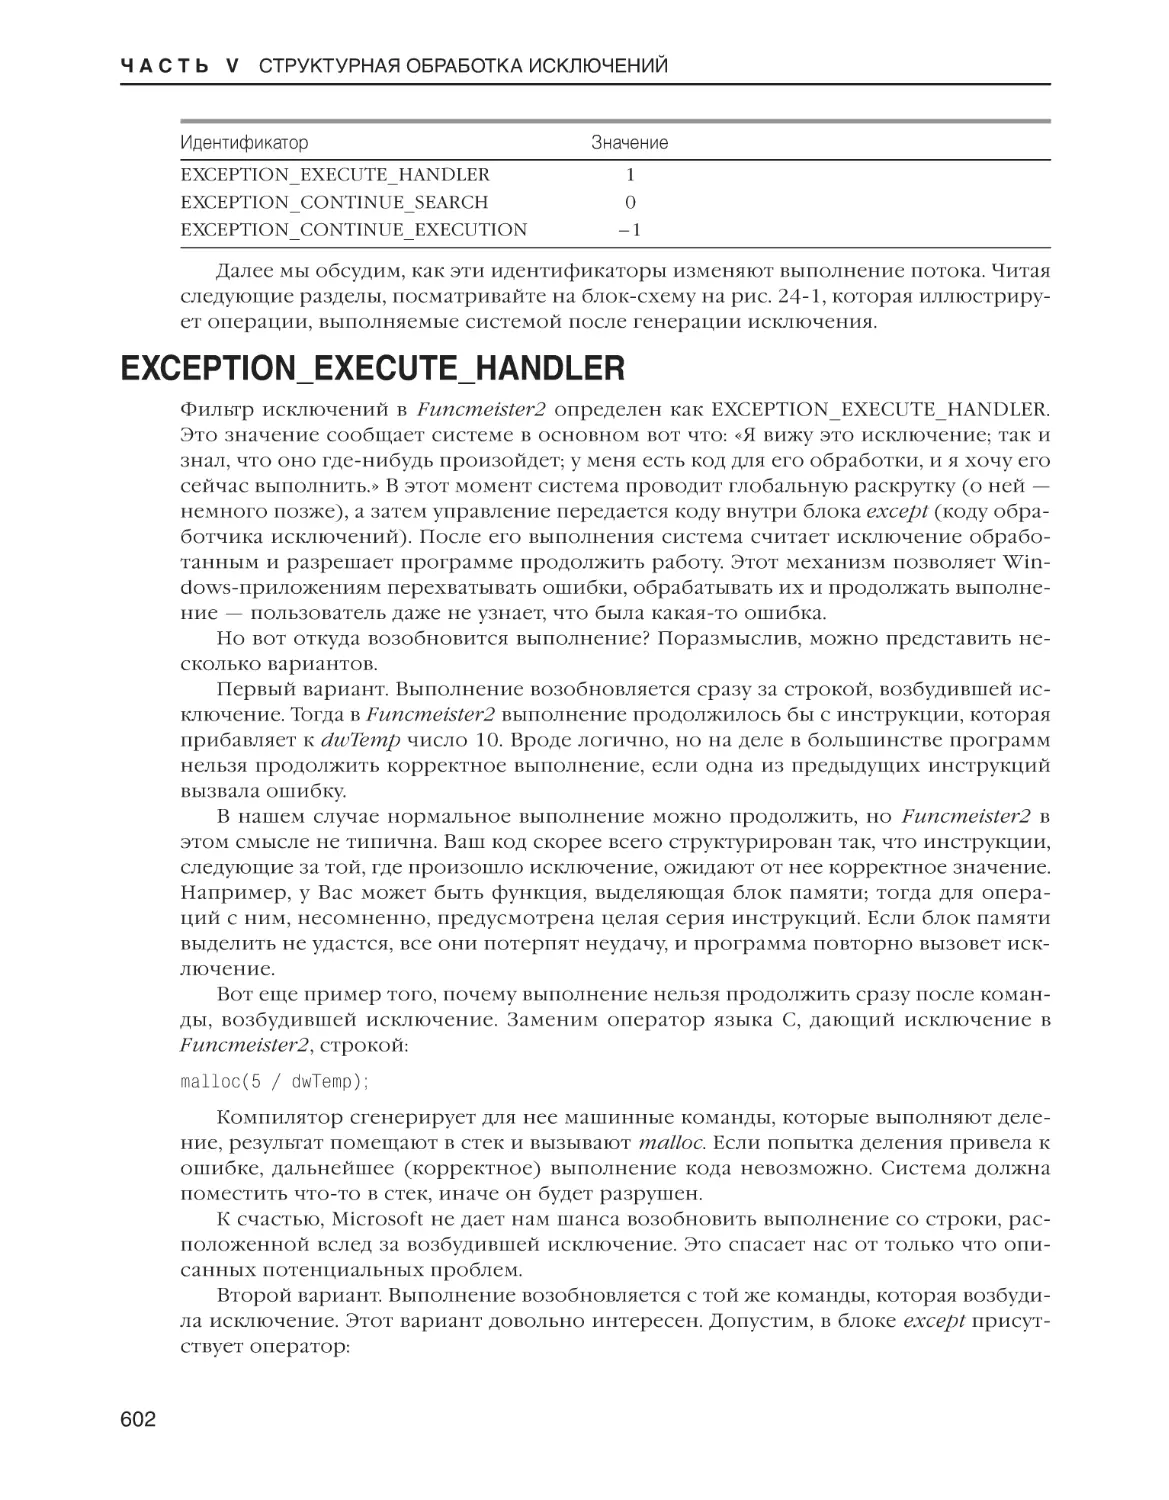 EXCEPTION_EXECUTE_HANDLER